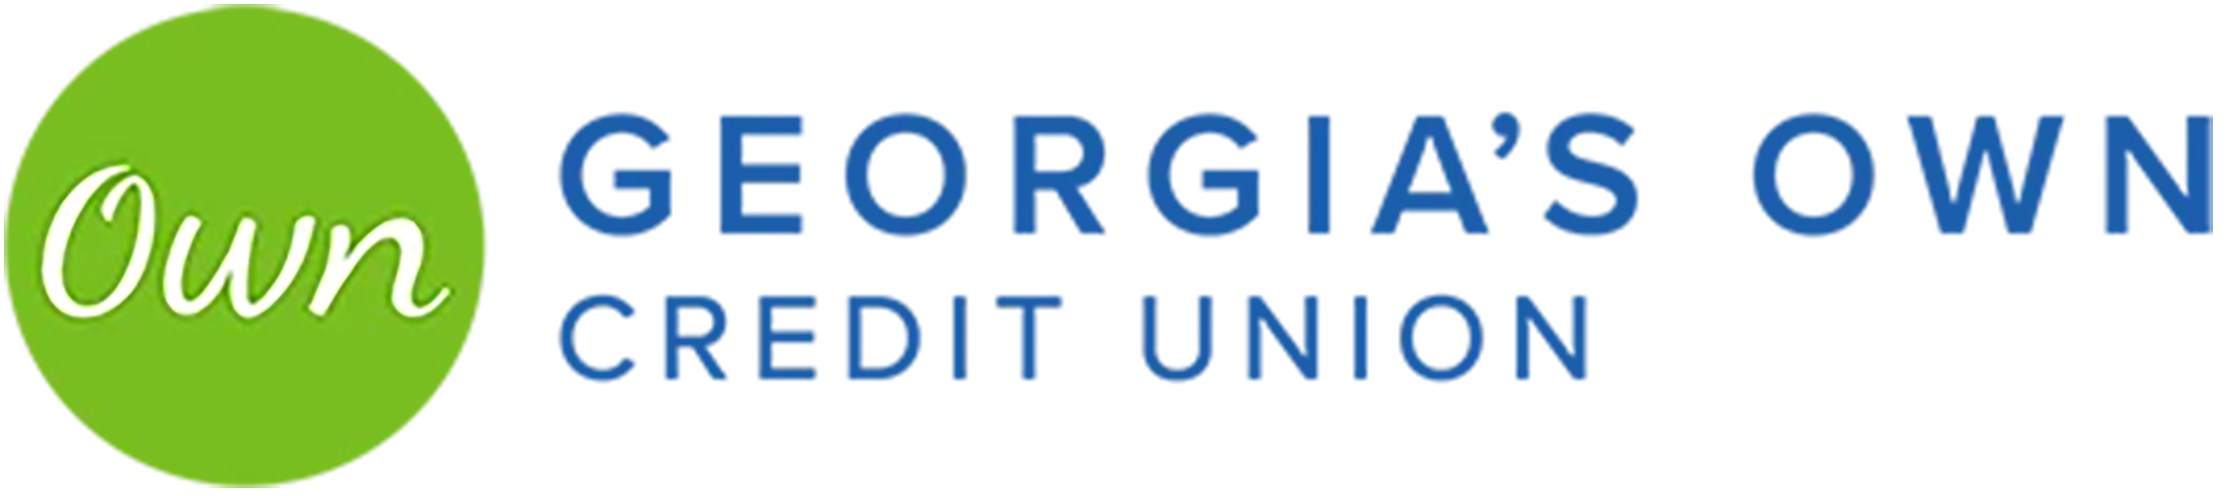 Georgia's Own sponsor logo